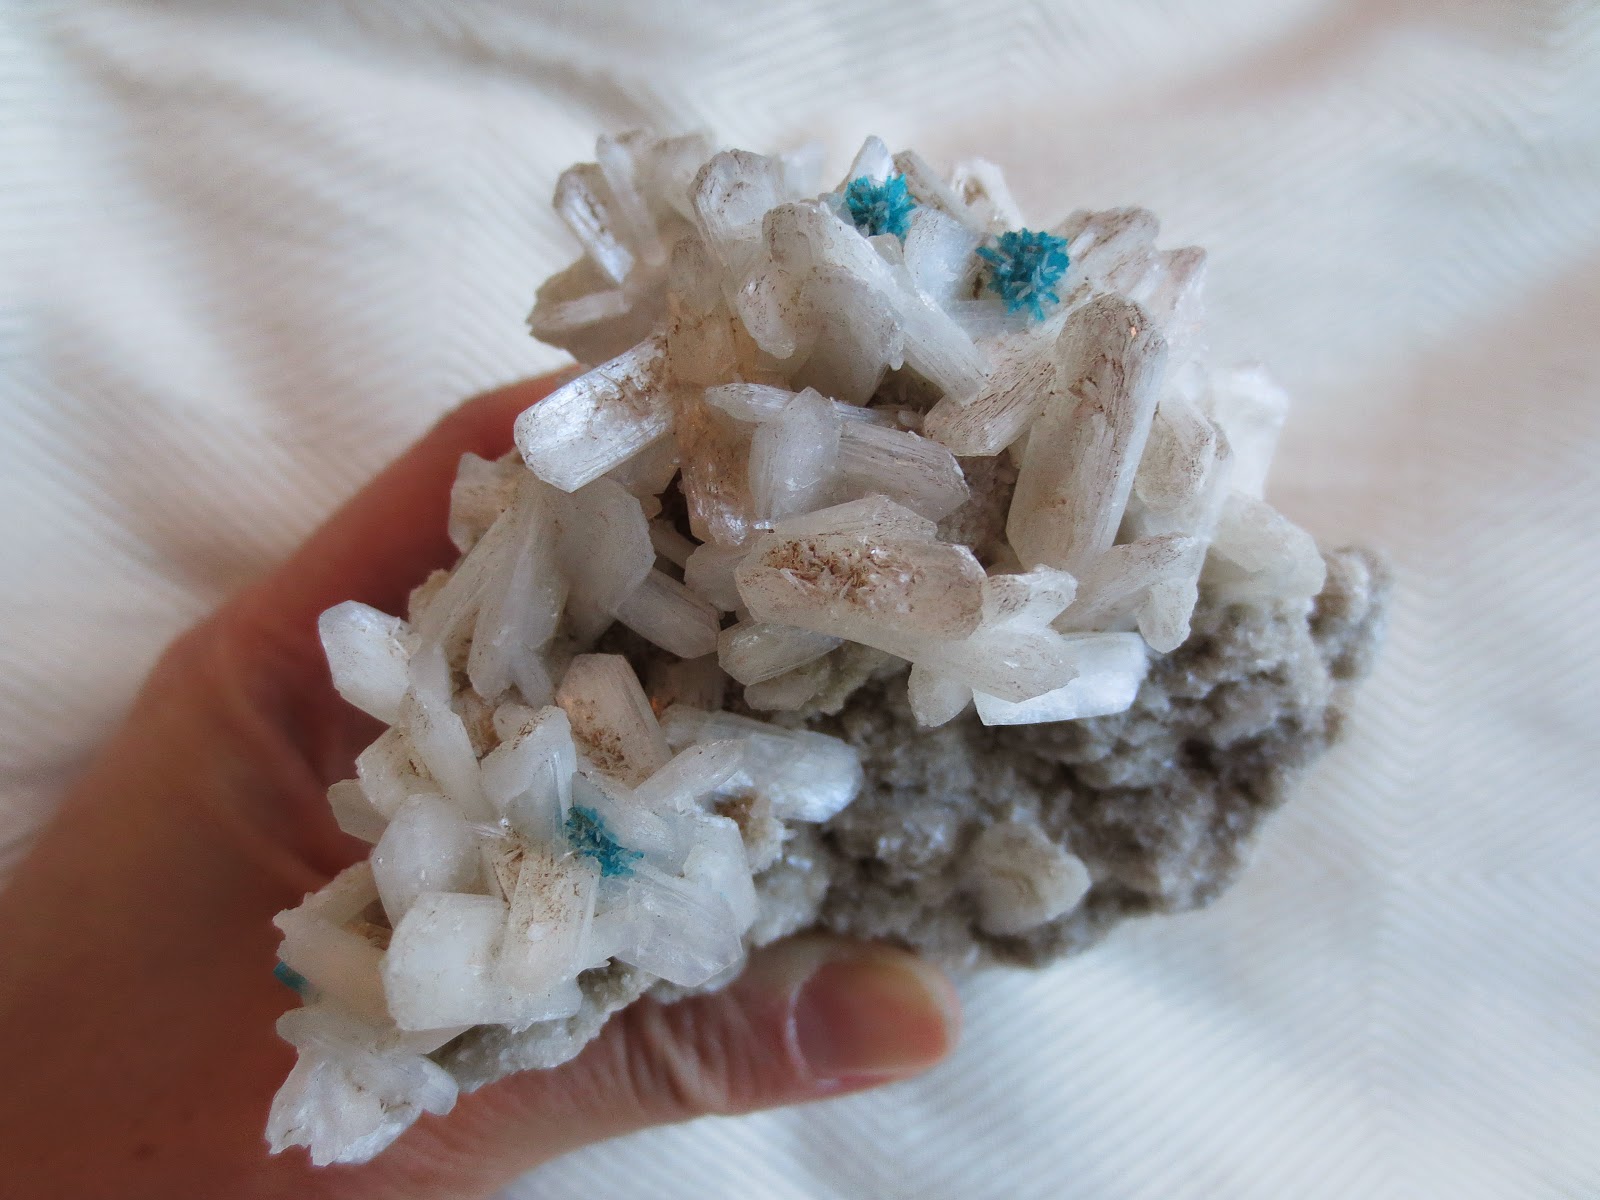 Blue cavansite crystals on stilbite